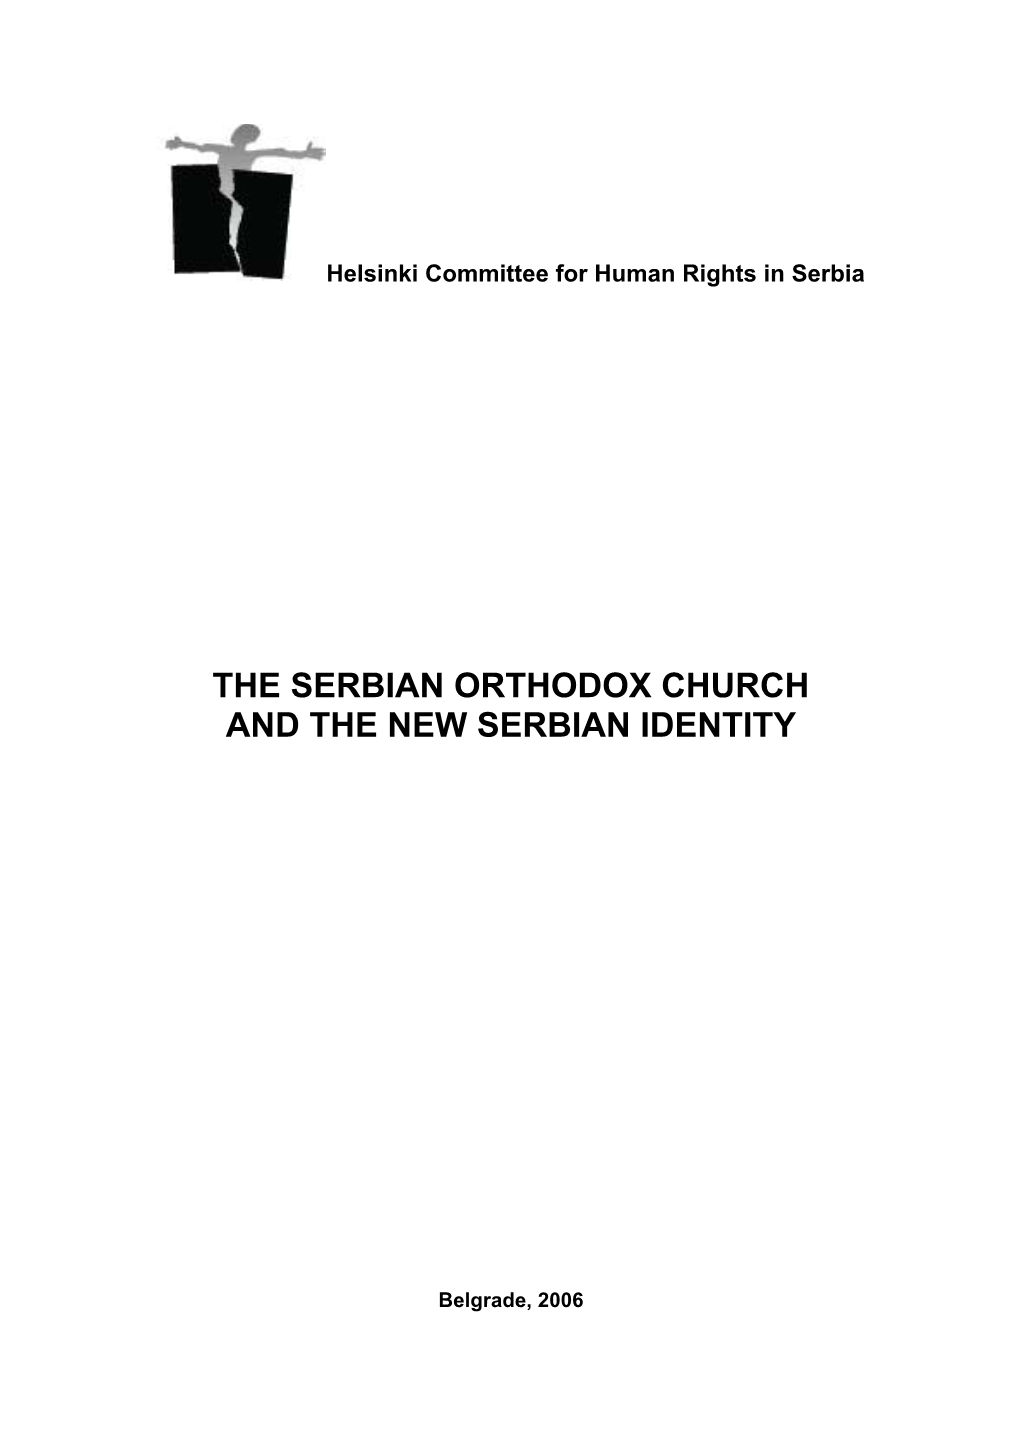 The Serbian Orthodox Church and the New Serbian Identity